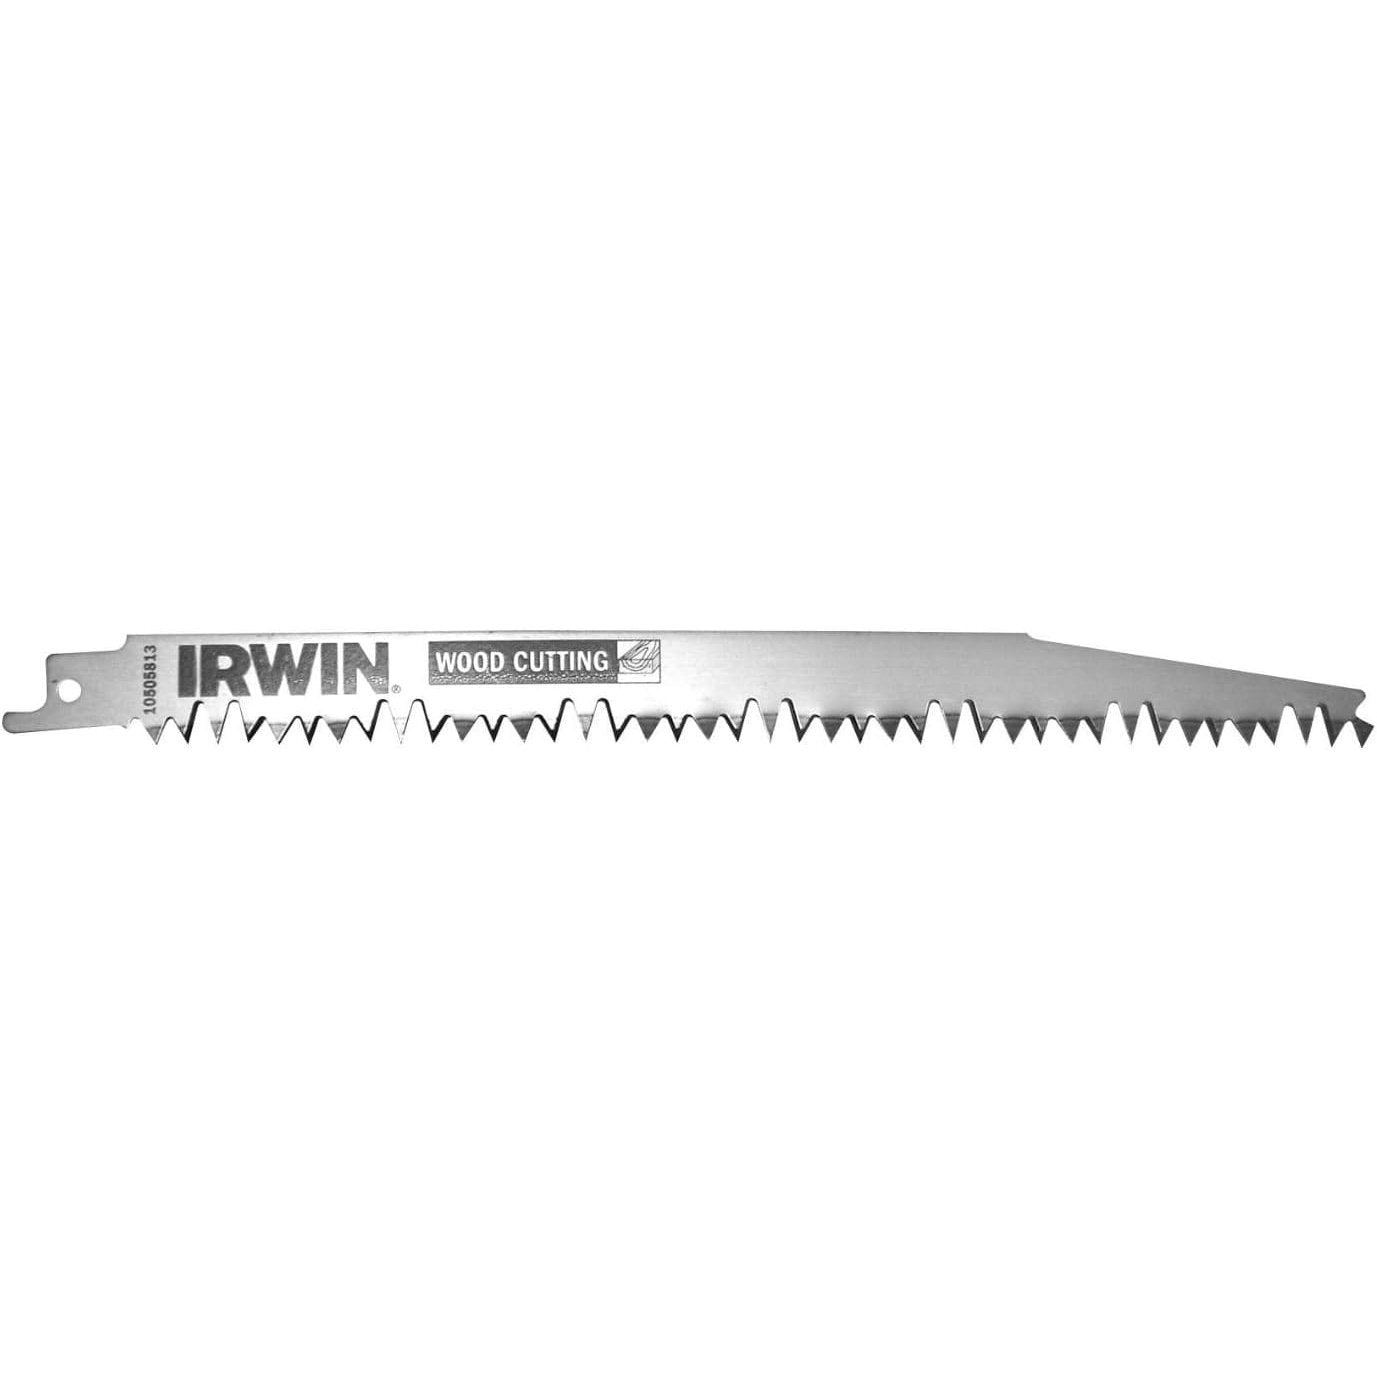 Irwin Masonry Reciprocating Sabre Saw Blade | Supply Master, Accra, Ghana Saw Blades Buy Tools hardware Building materials